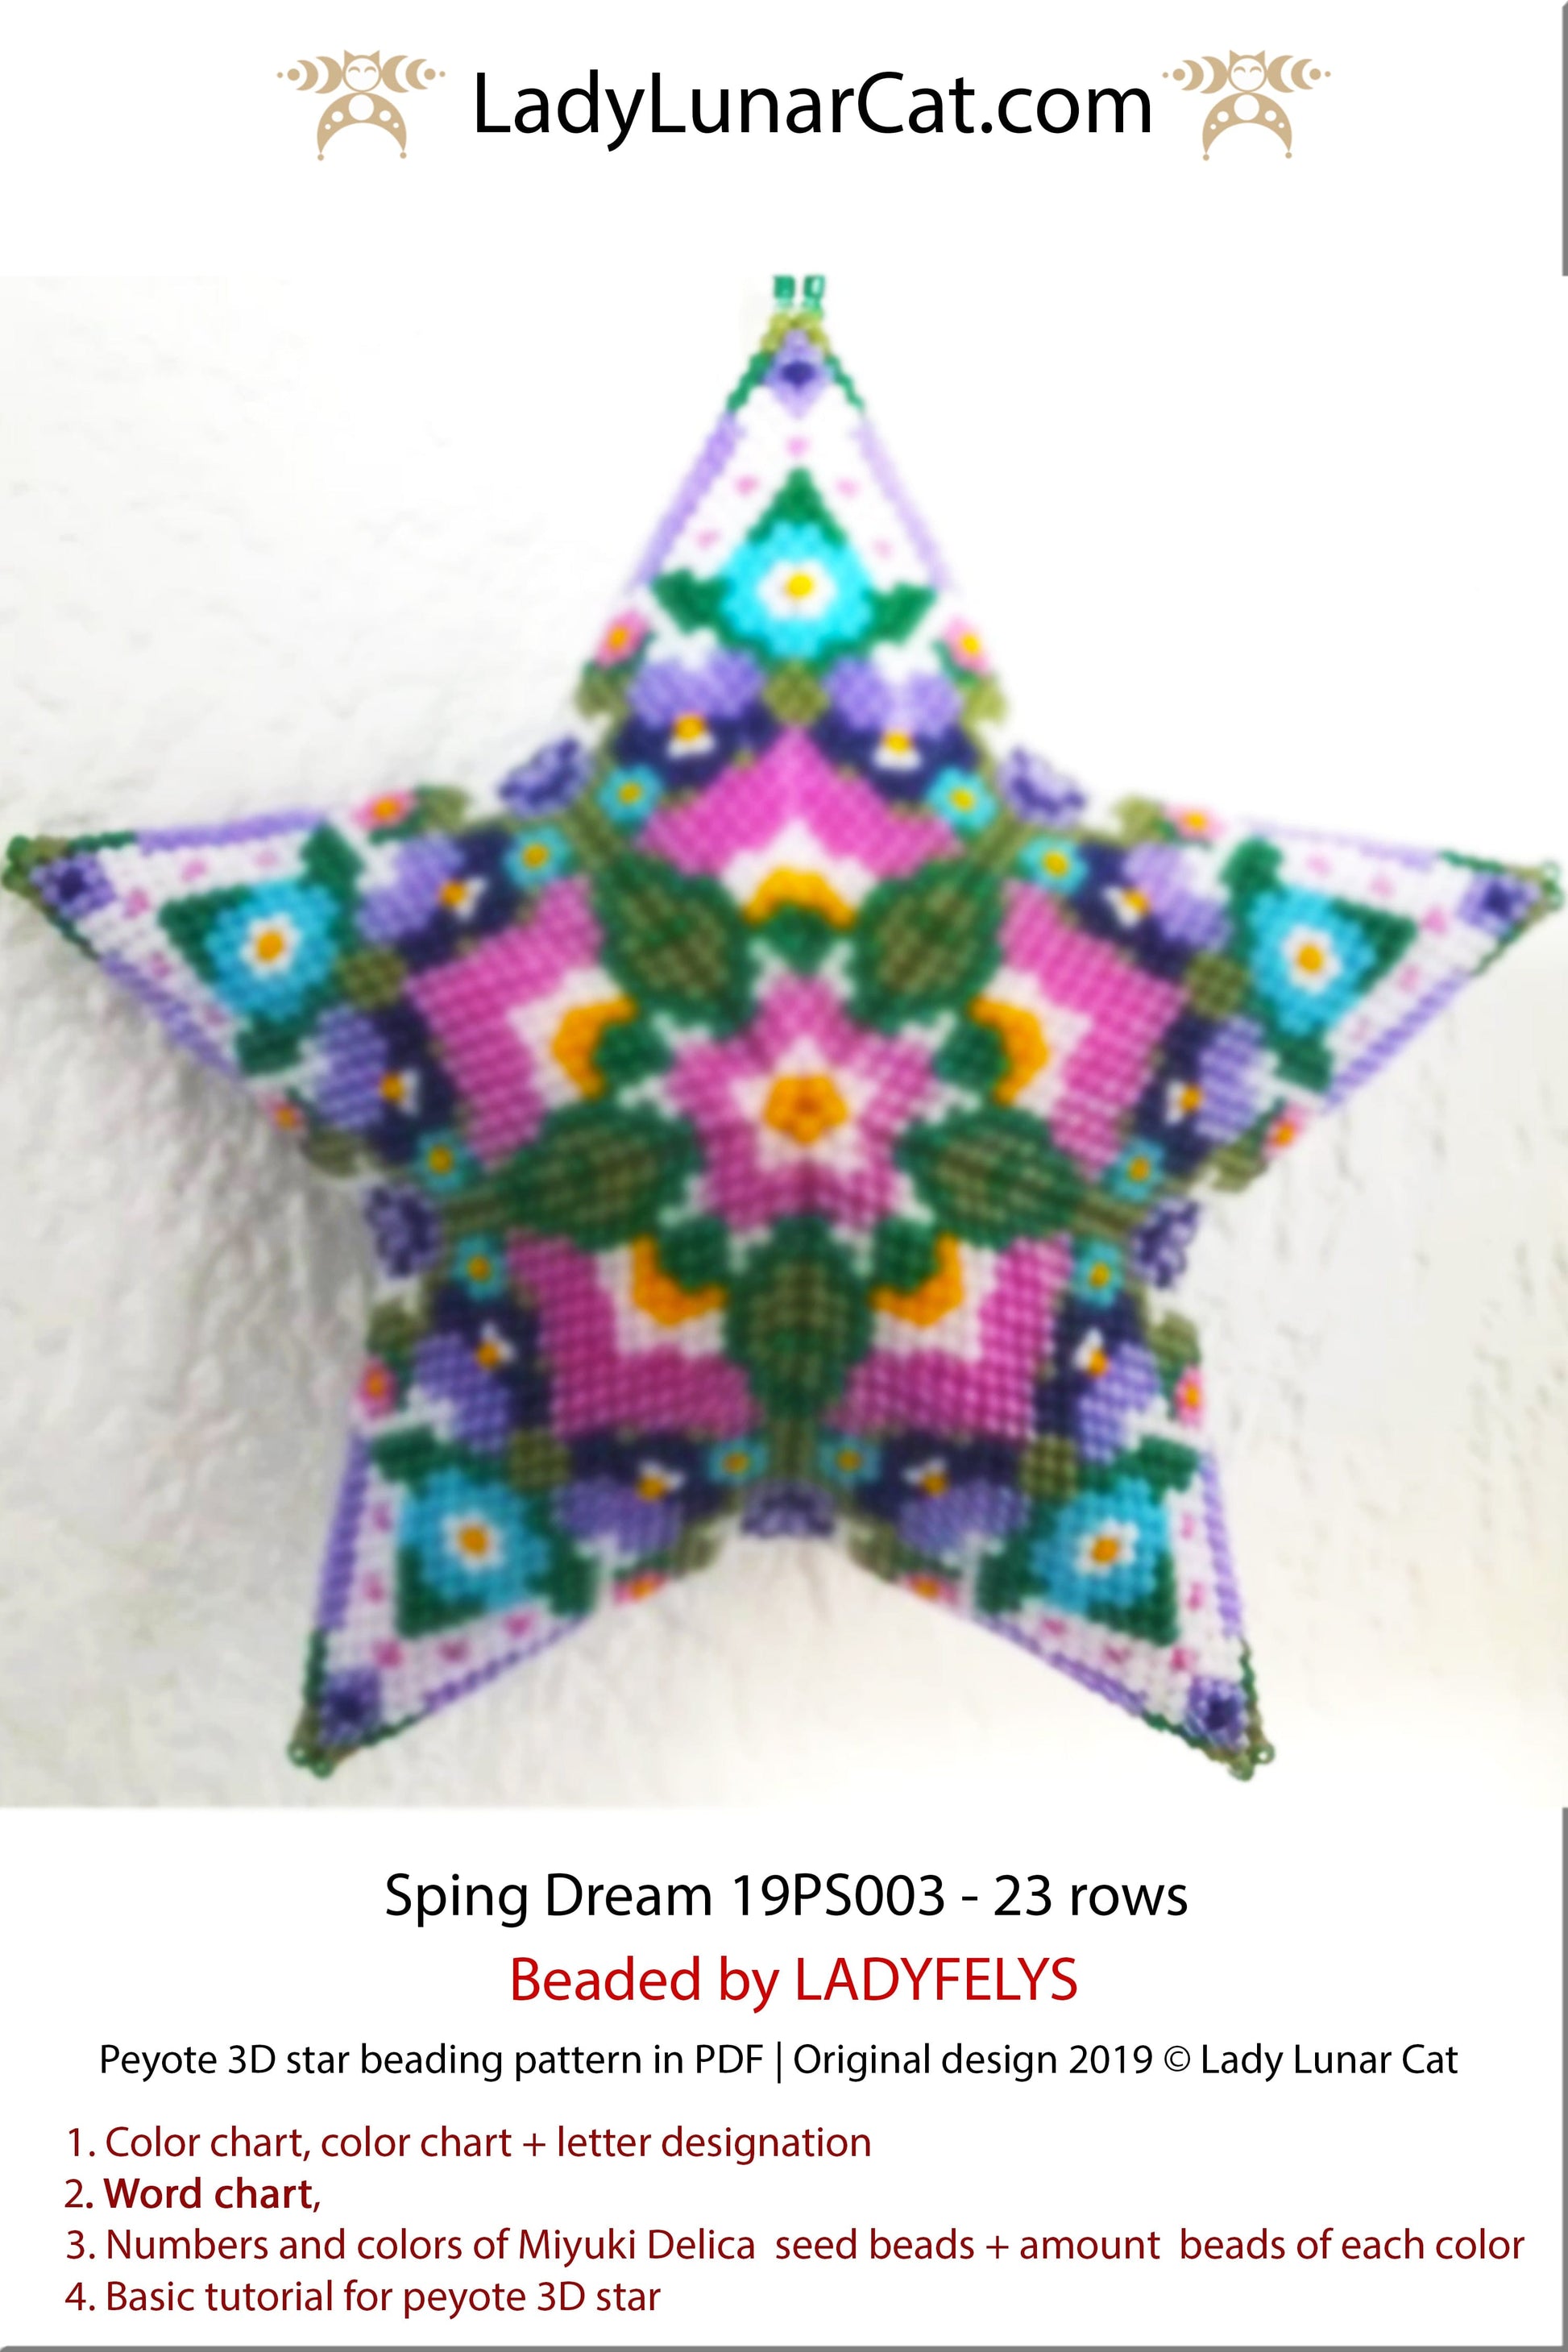 Peyote star patterns for beading flowers Spring dream 19PS003 LadyLunarCat